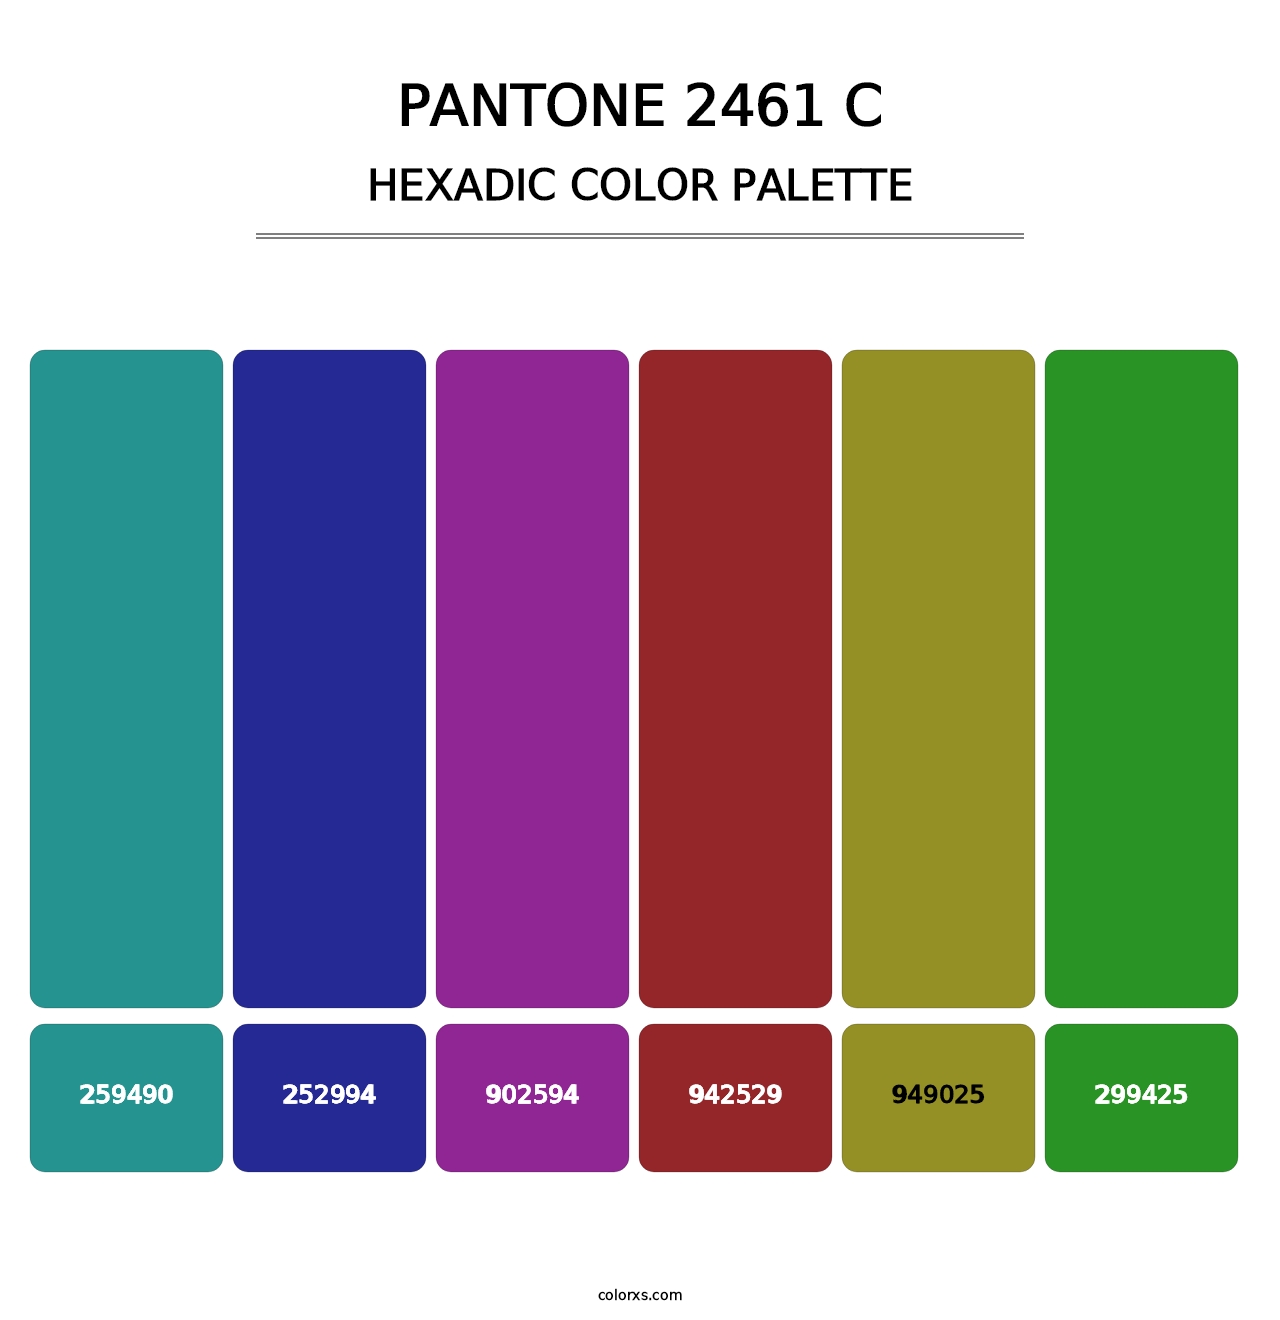 PANTONE 2461 C - Hexadic Color Palette